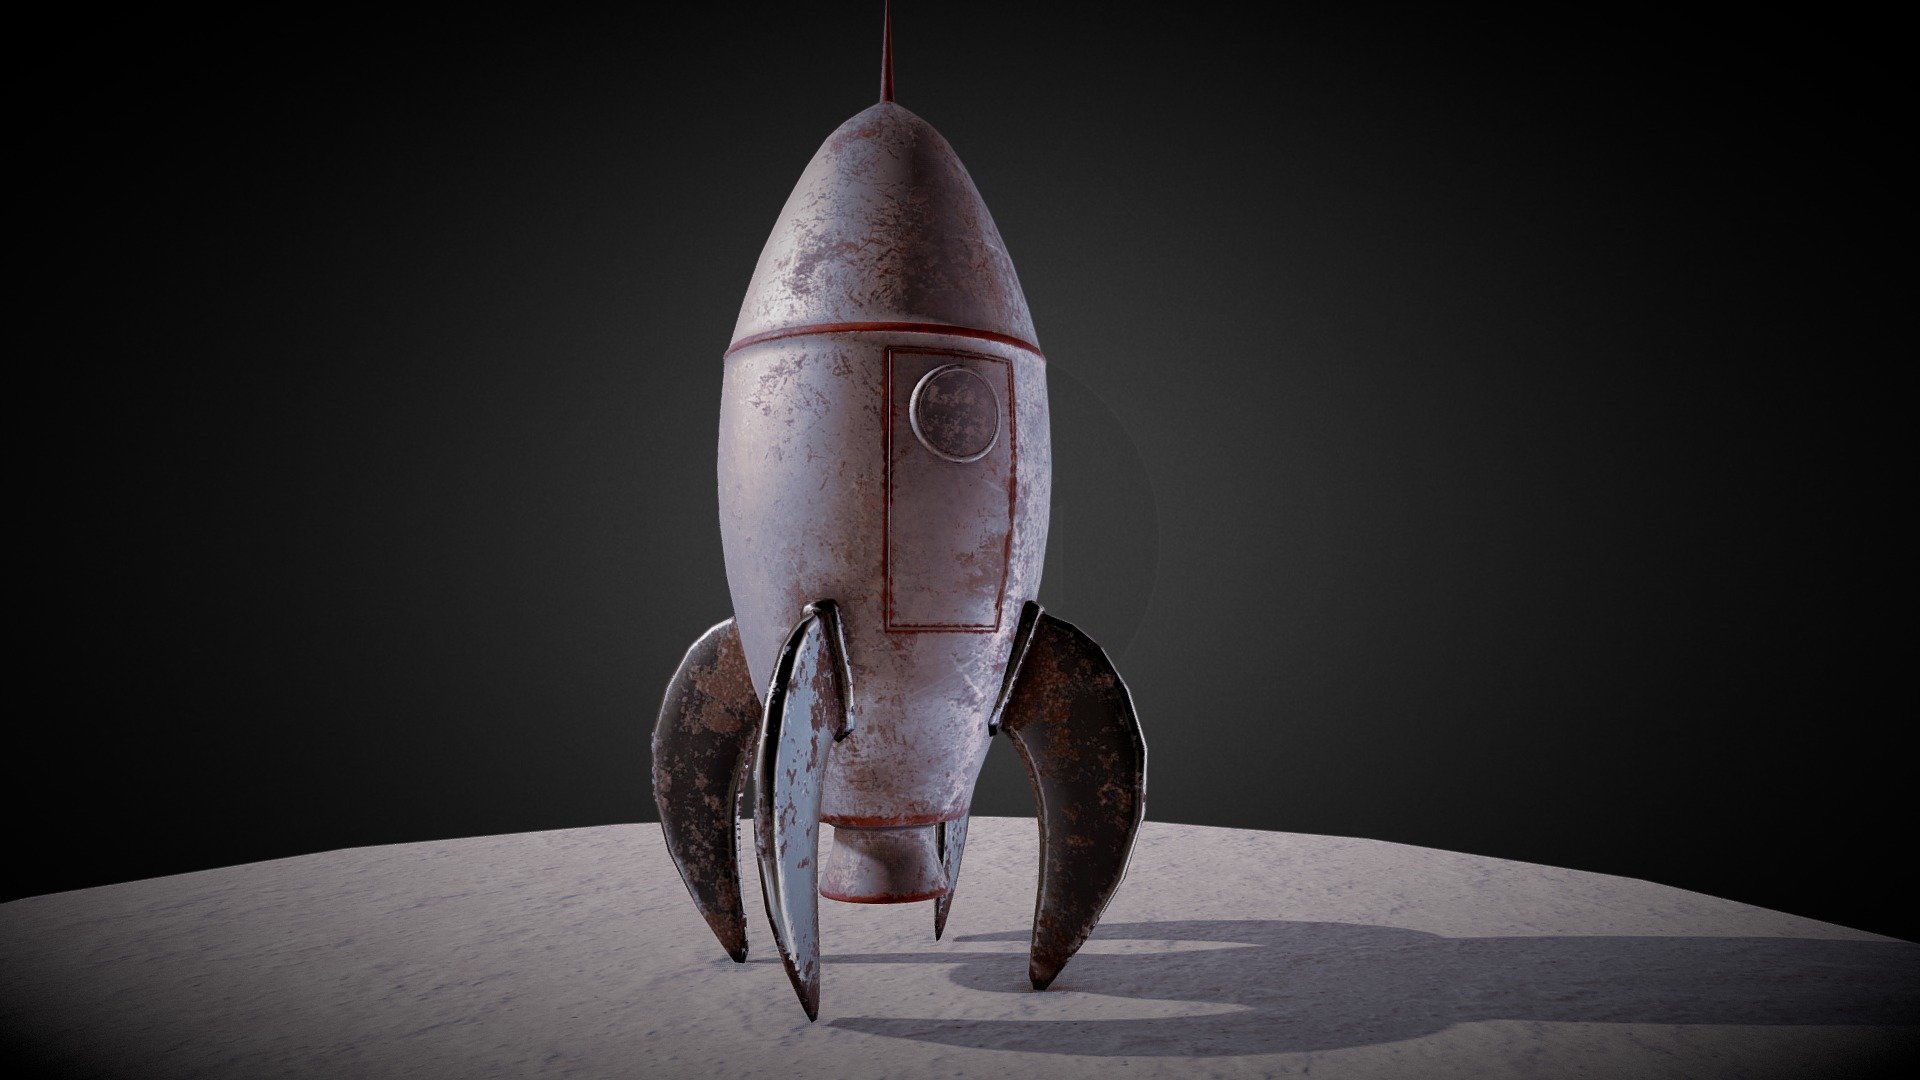 Textured in Substance Painter 2.

Model by: http://www.facebook.com/tutorialeskames - Spaceship Rocket - 3D model by almax 3d model